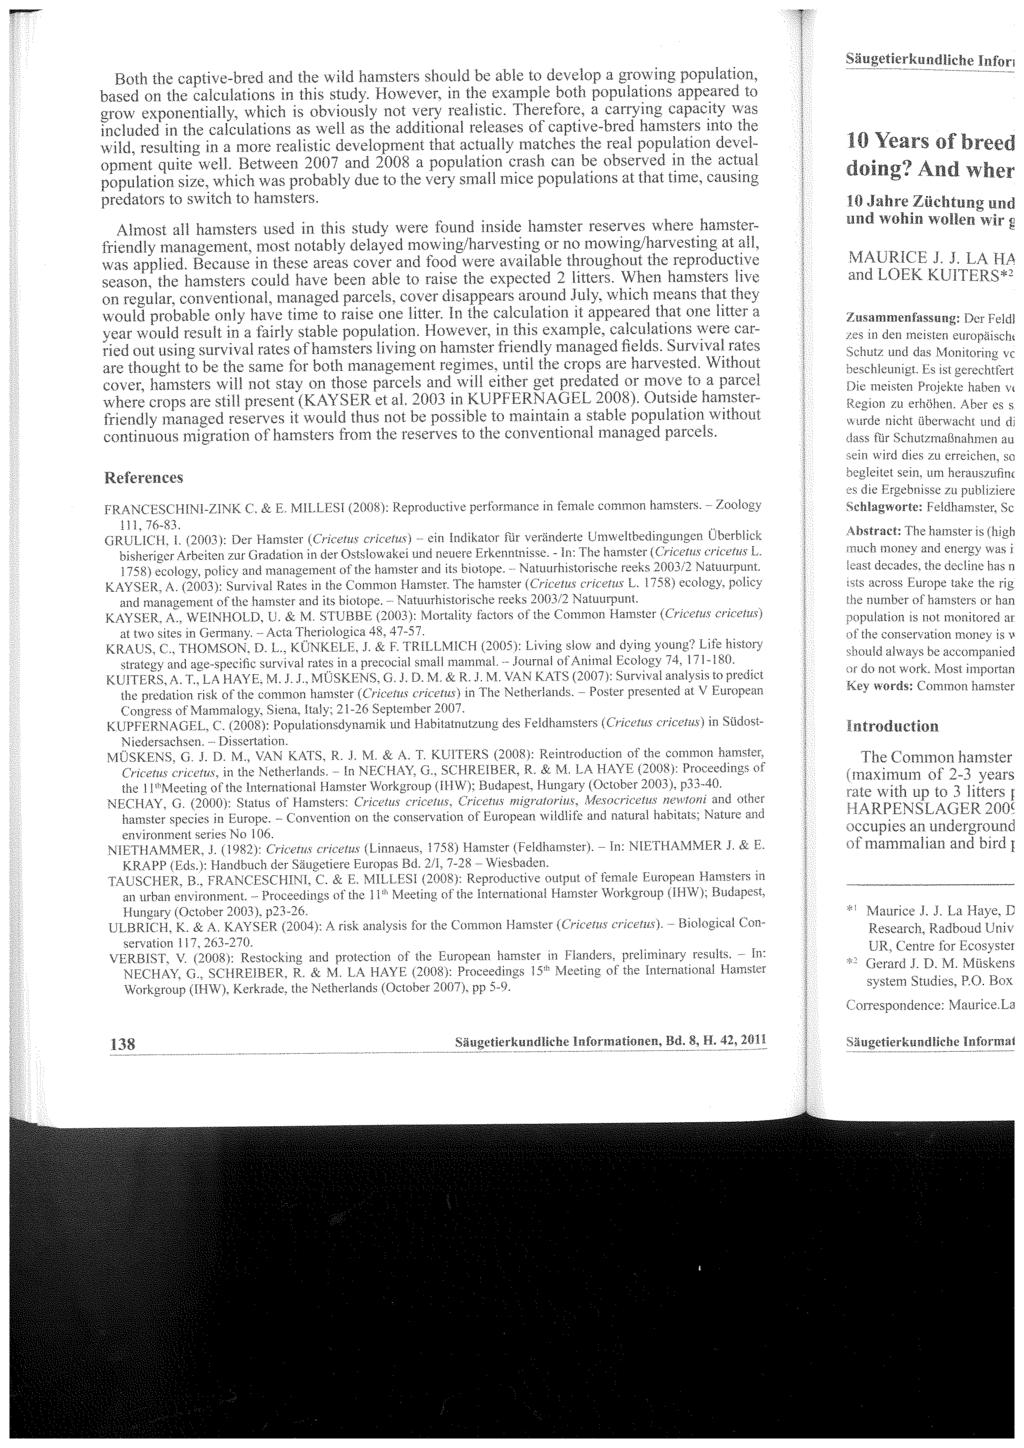 References FRANCESCHINJ-ZJNK female common hamsters. - J l, 76-83. GRULlCfl. l. (2003): criceius) --!ndikalor veriinderle Umwelthedingungcn Oberblick Ostslowakei und neuere Erkenntnisse.